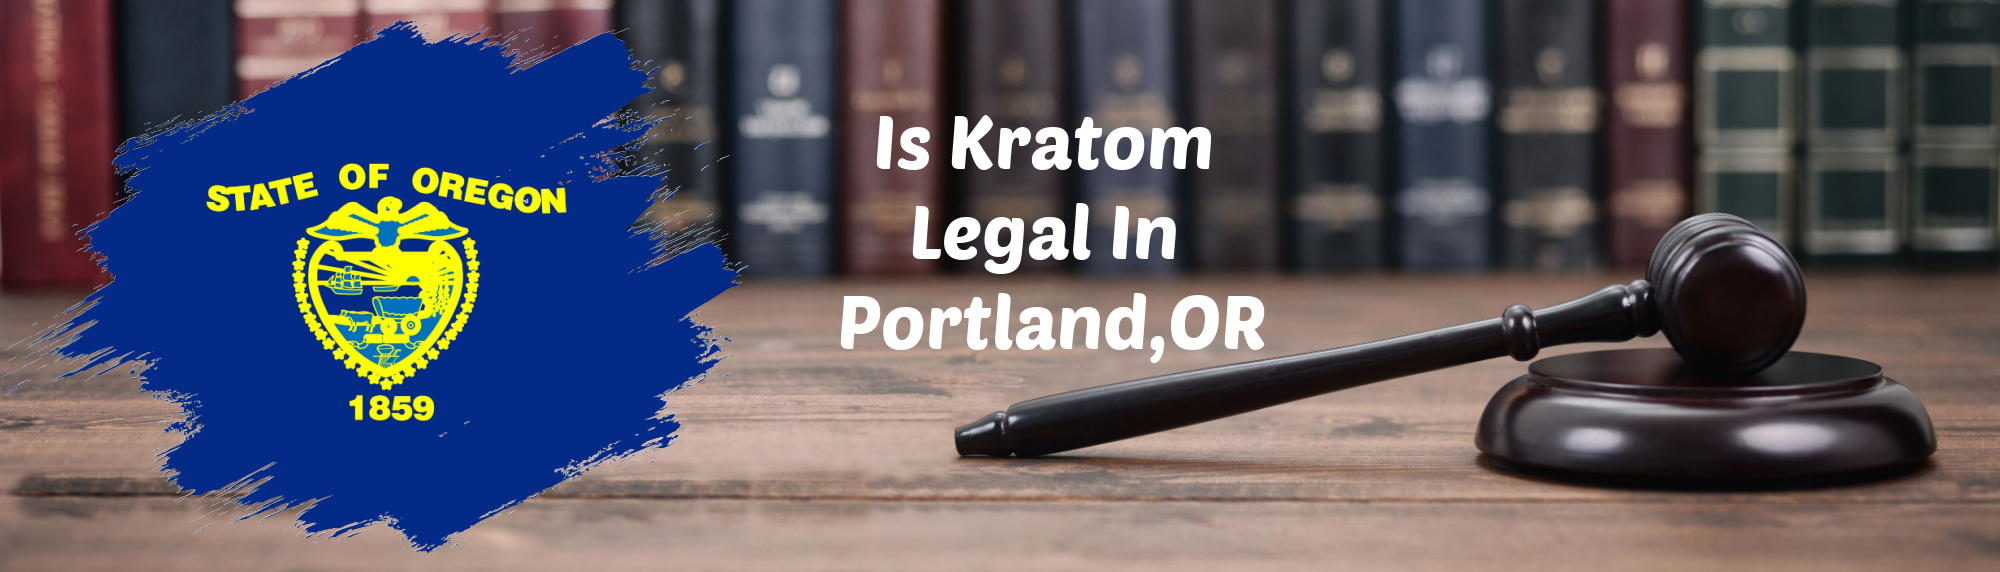 image of is kratom legal in portland oregon